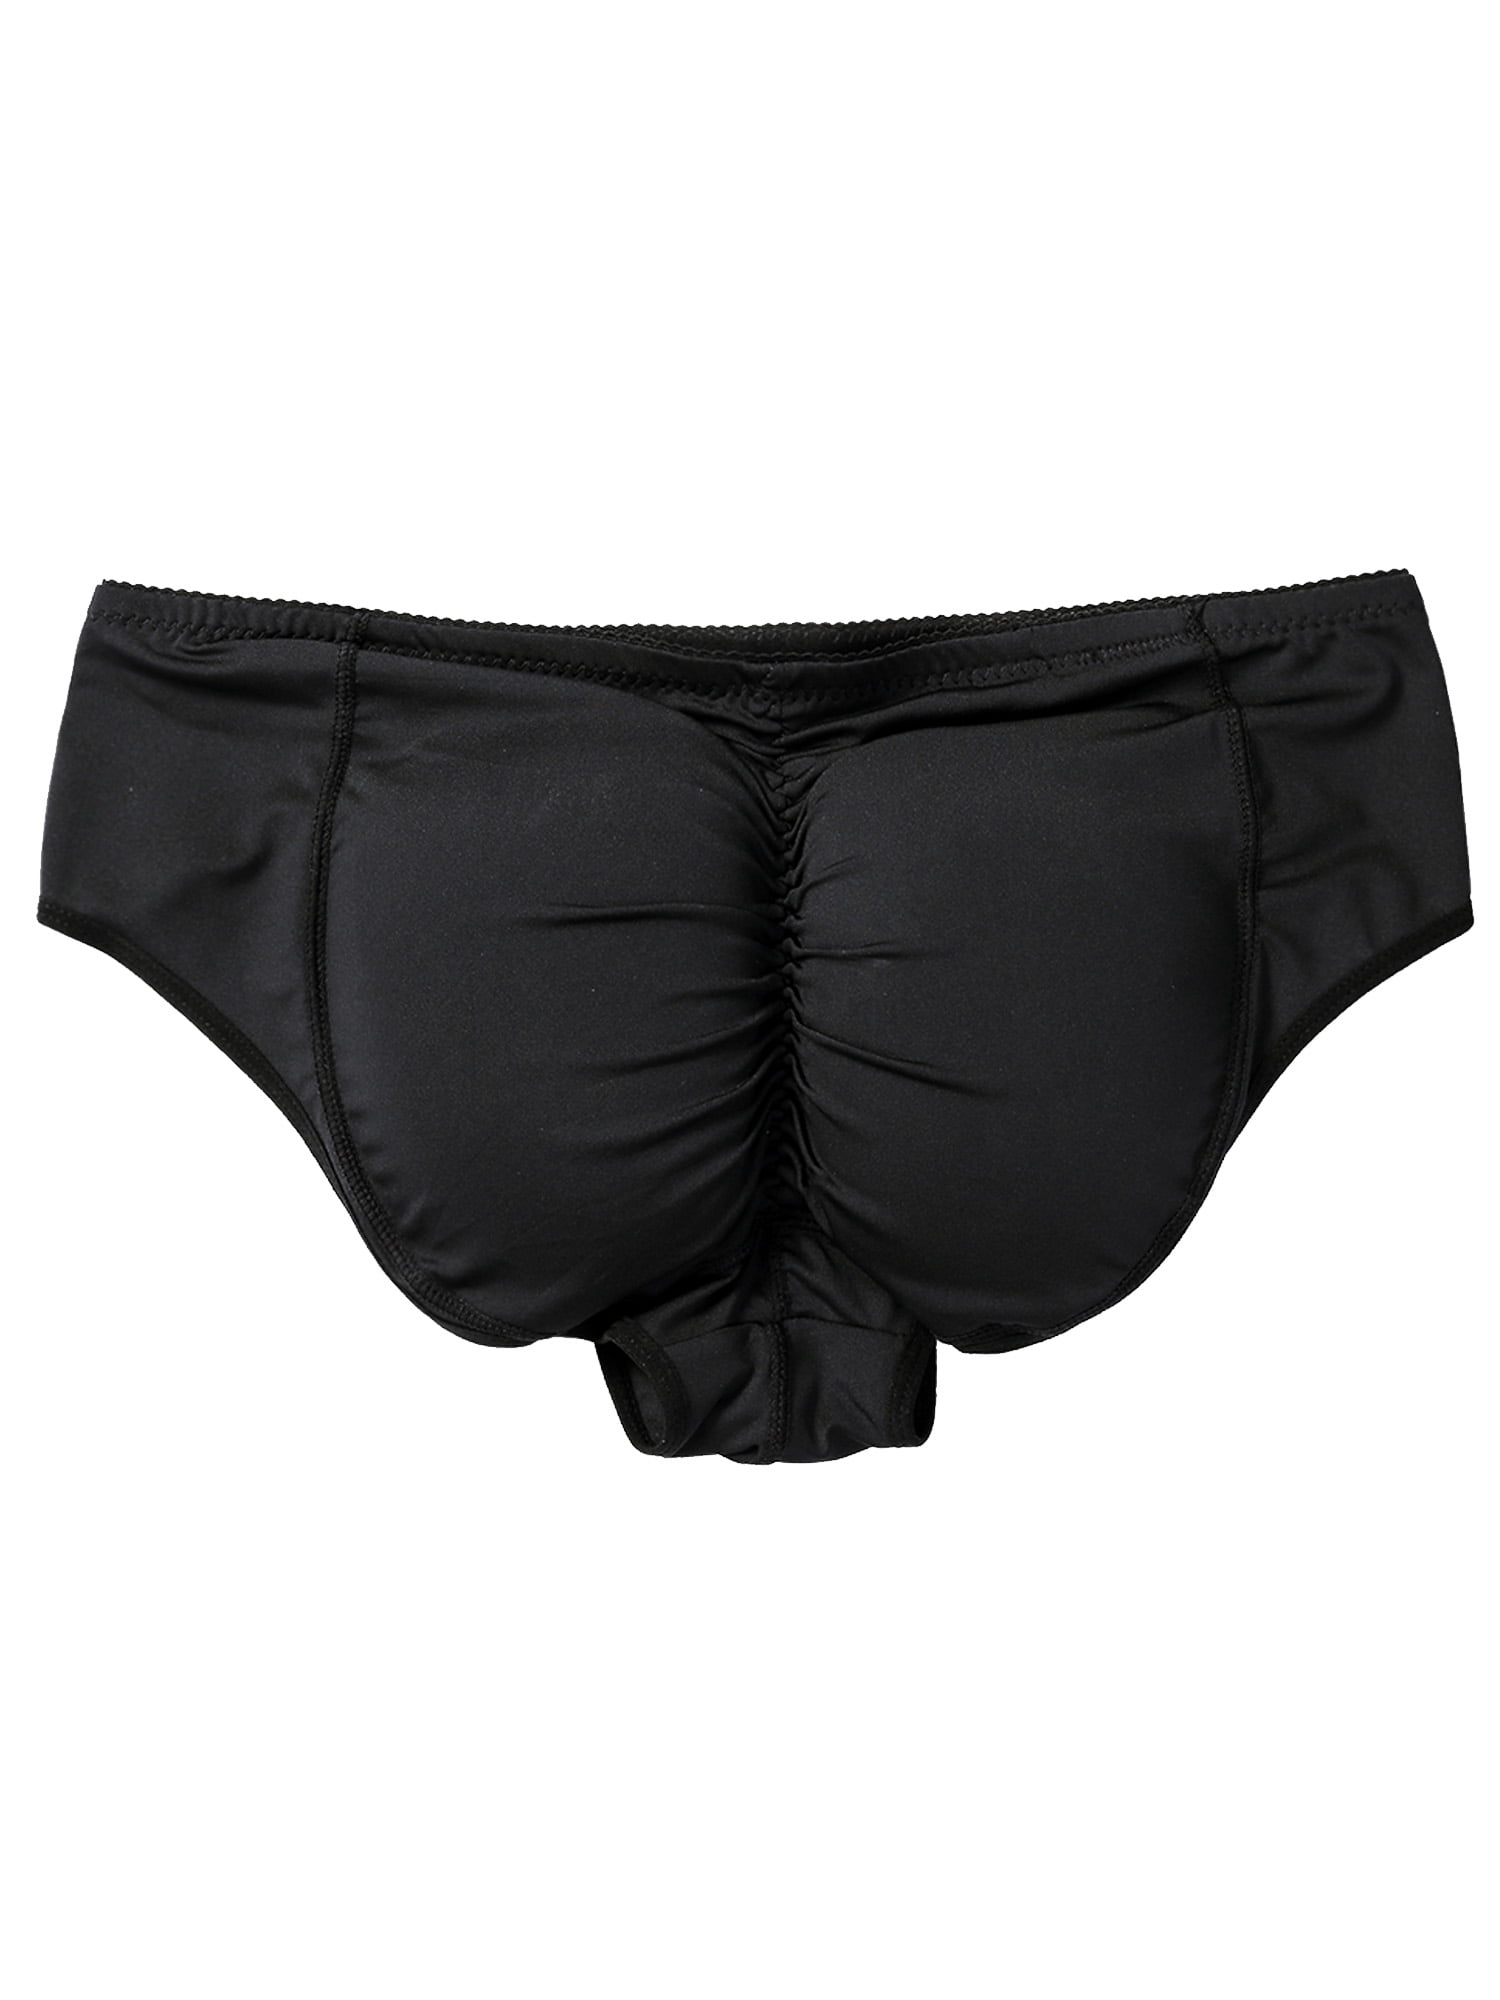 Atomic Black Elastic Hip Lifting Underwear